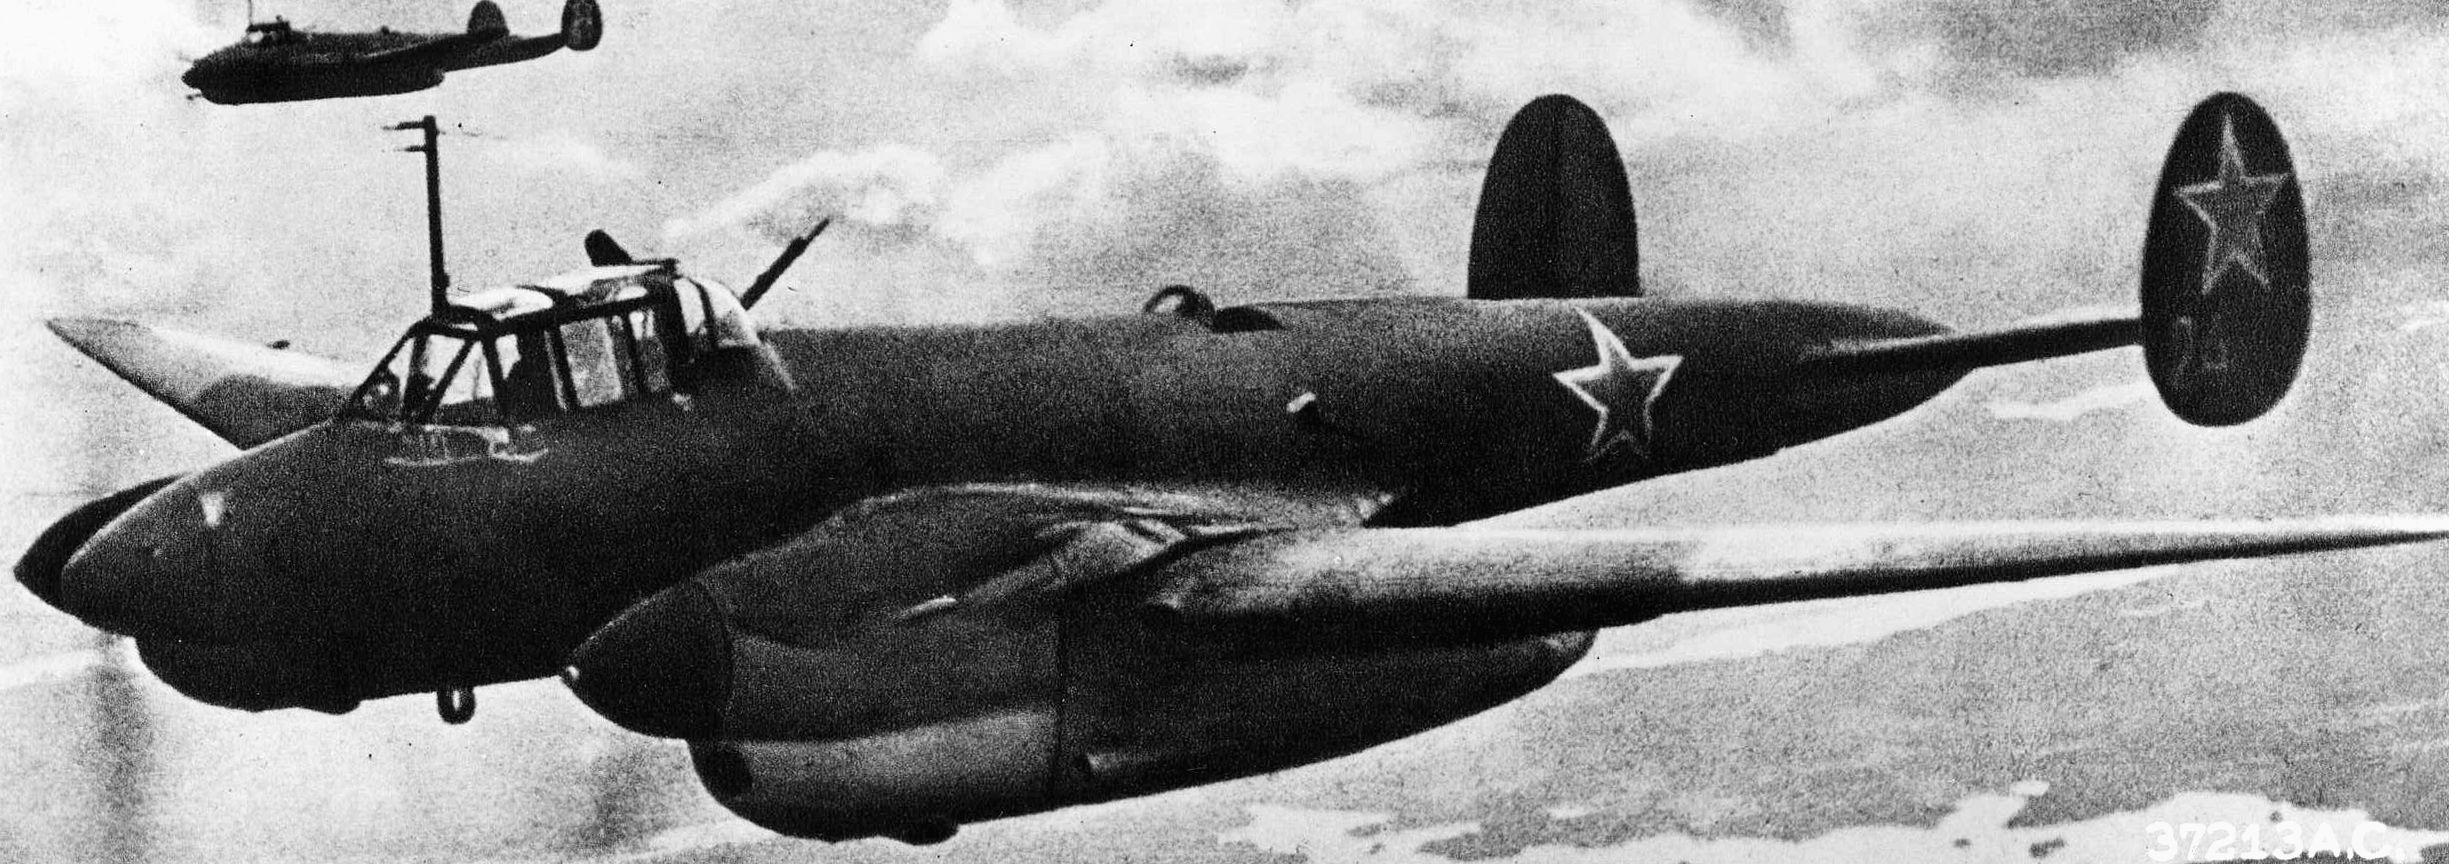 Soviet PE-2 bombers in flight.